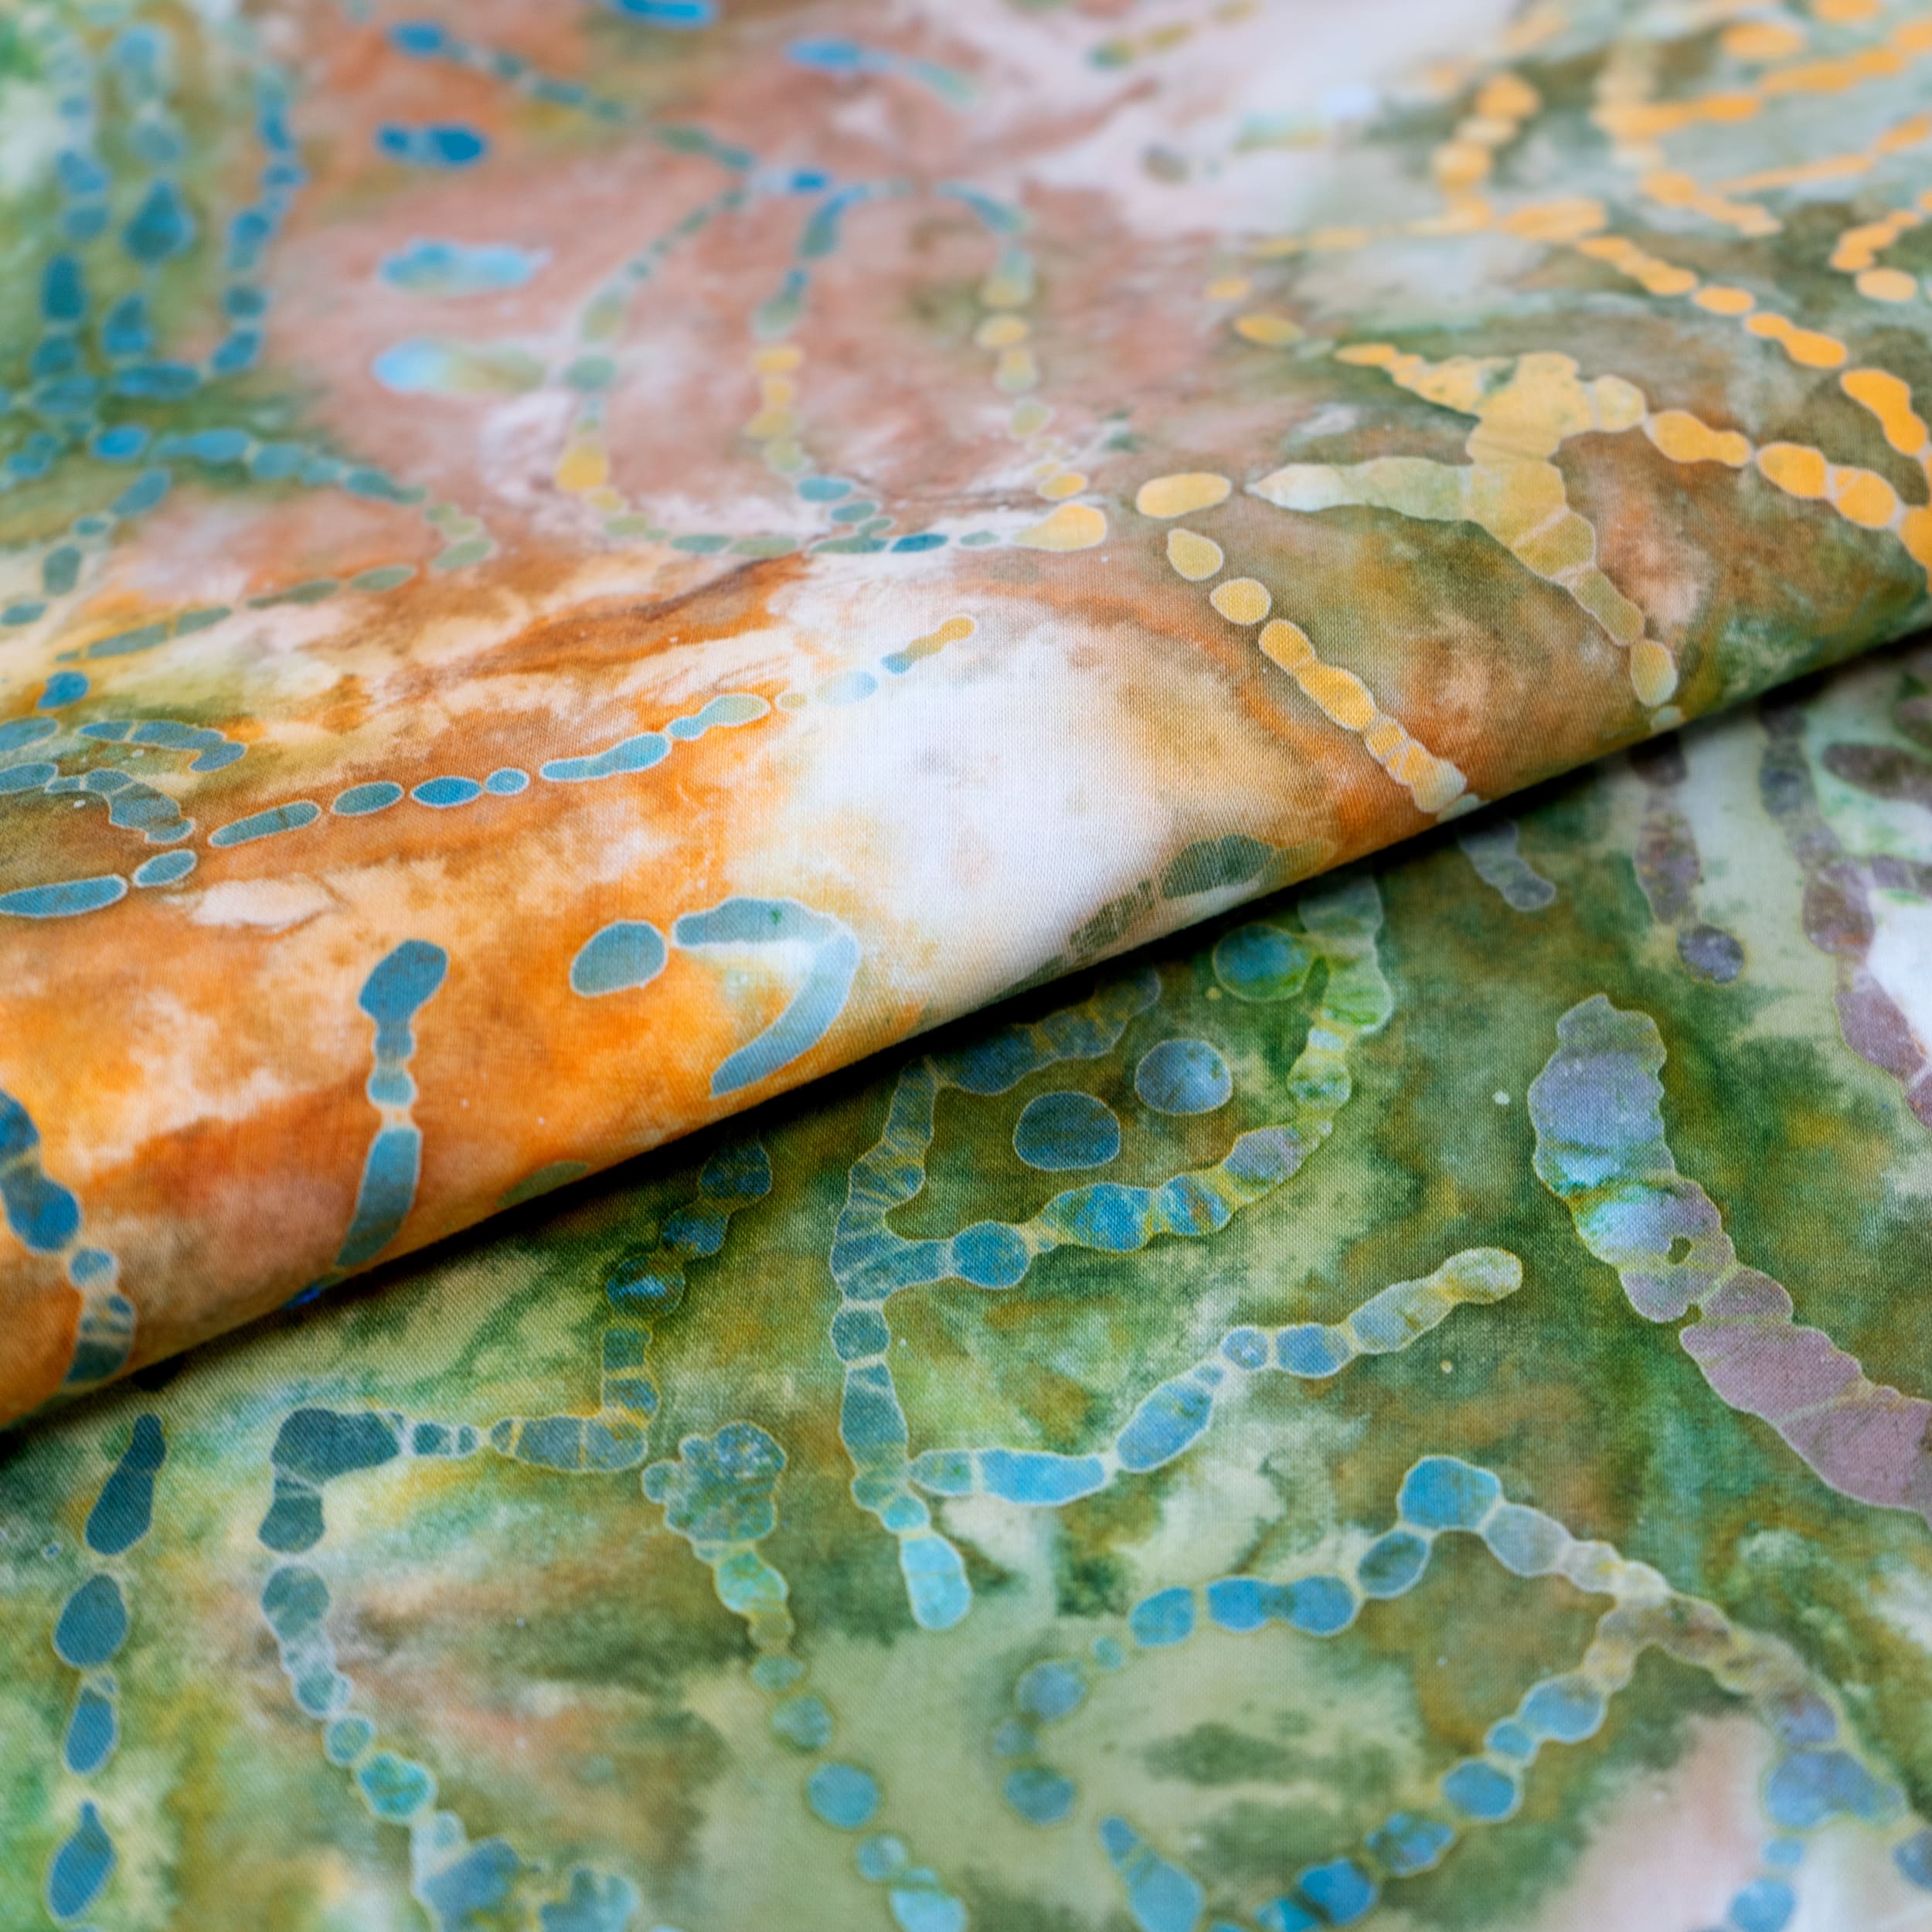 SINGER Batik Green &#x26; Orange Leaves Cotton Fabric